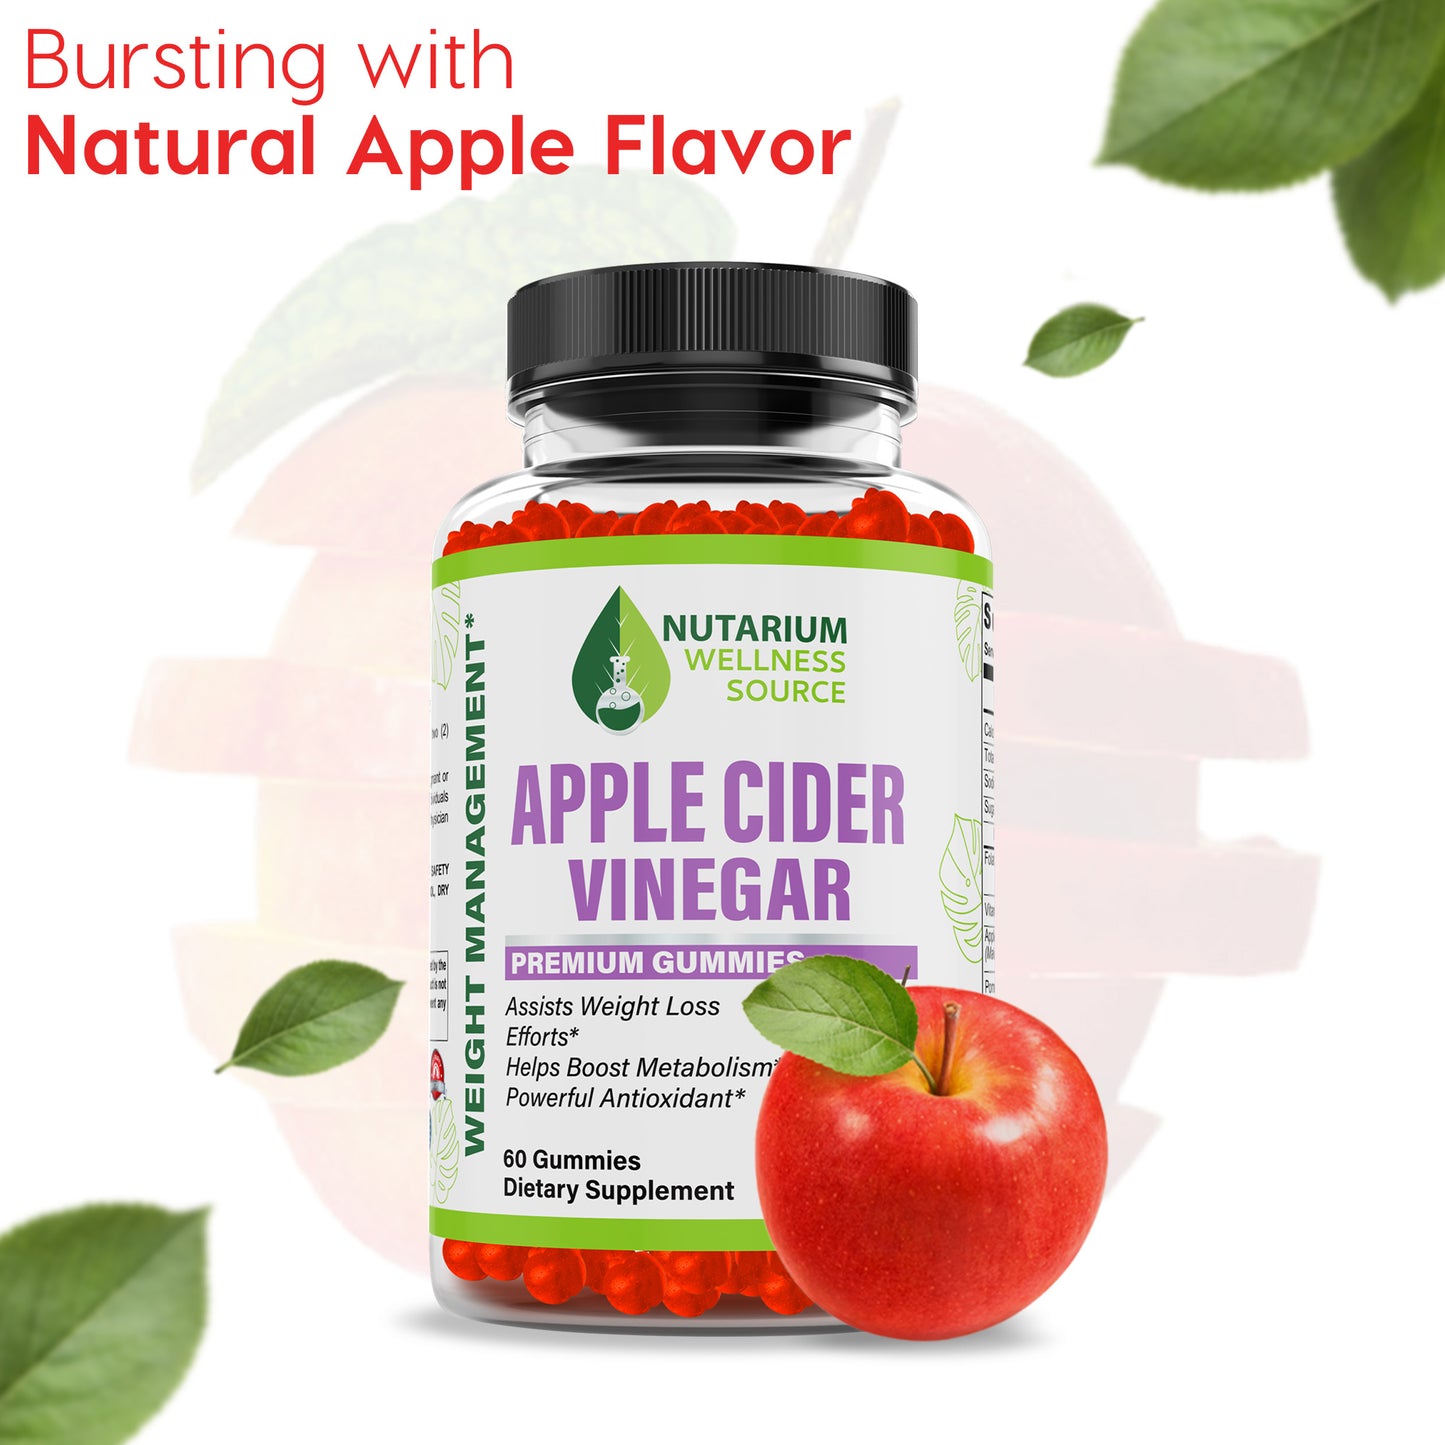 Apple Cider Vinegar Gummies - Nutarium